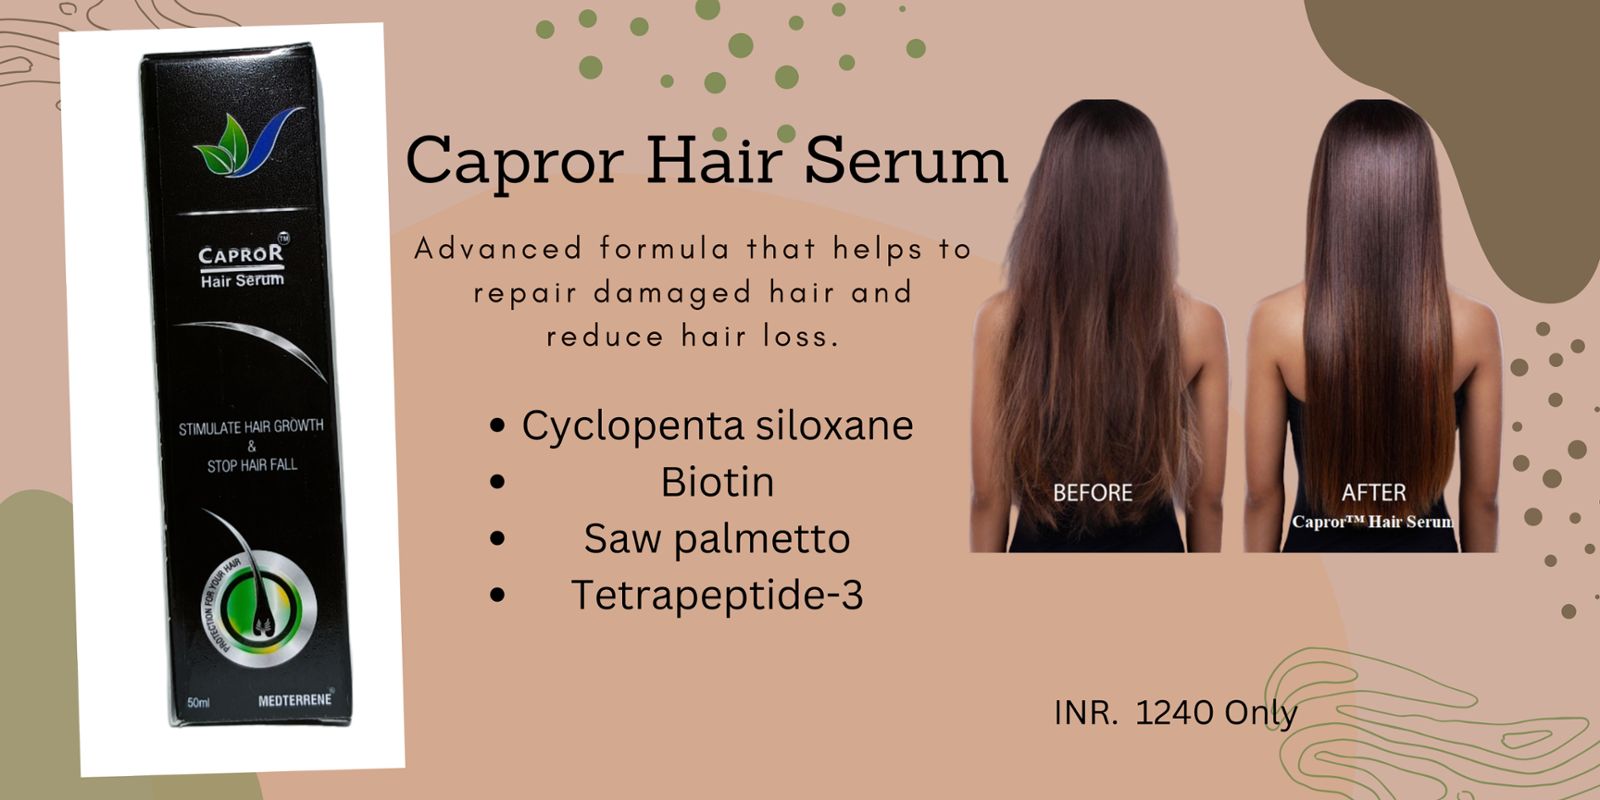 Capror hair serum